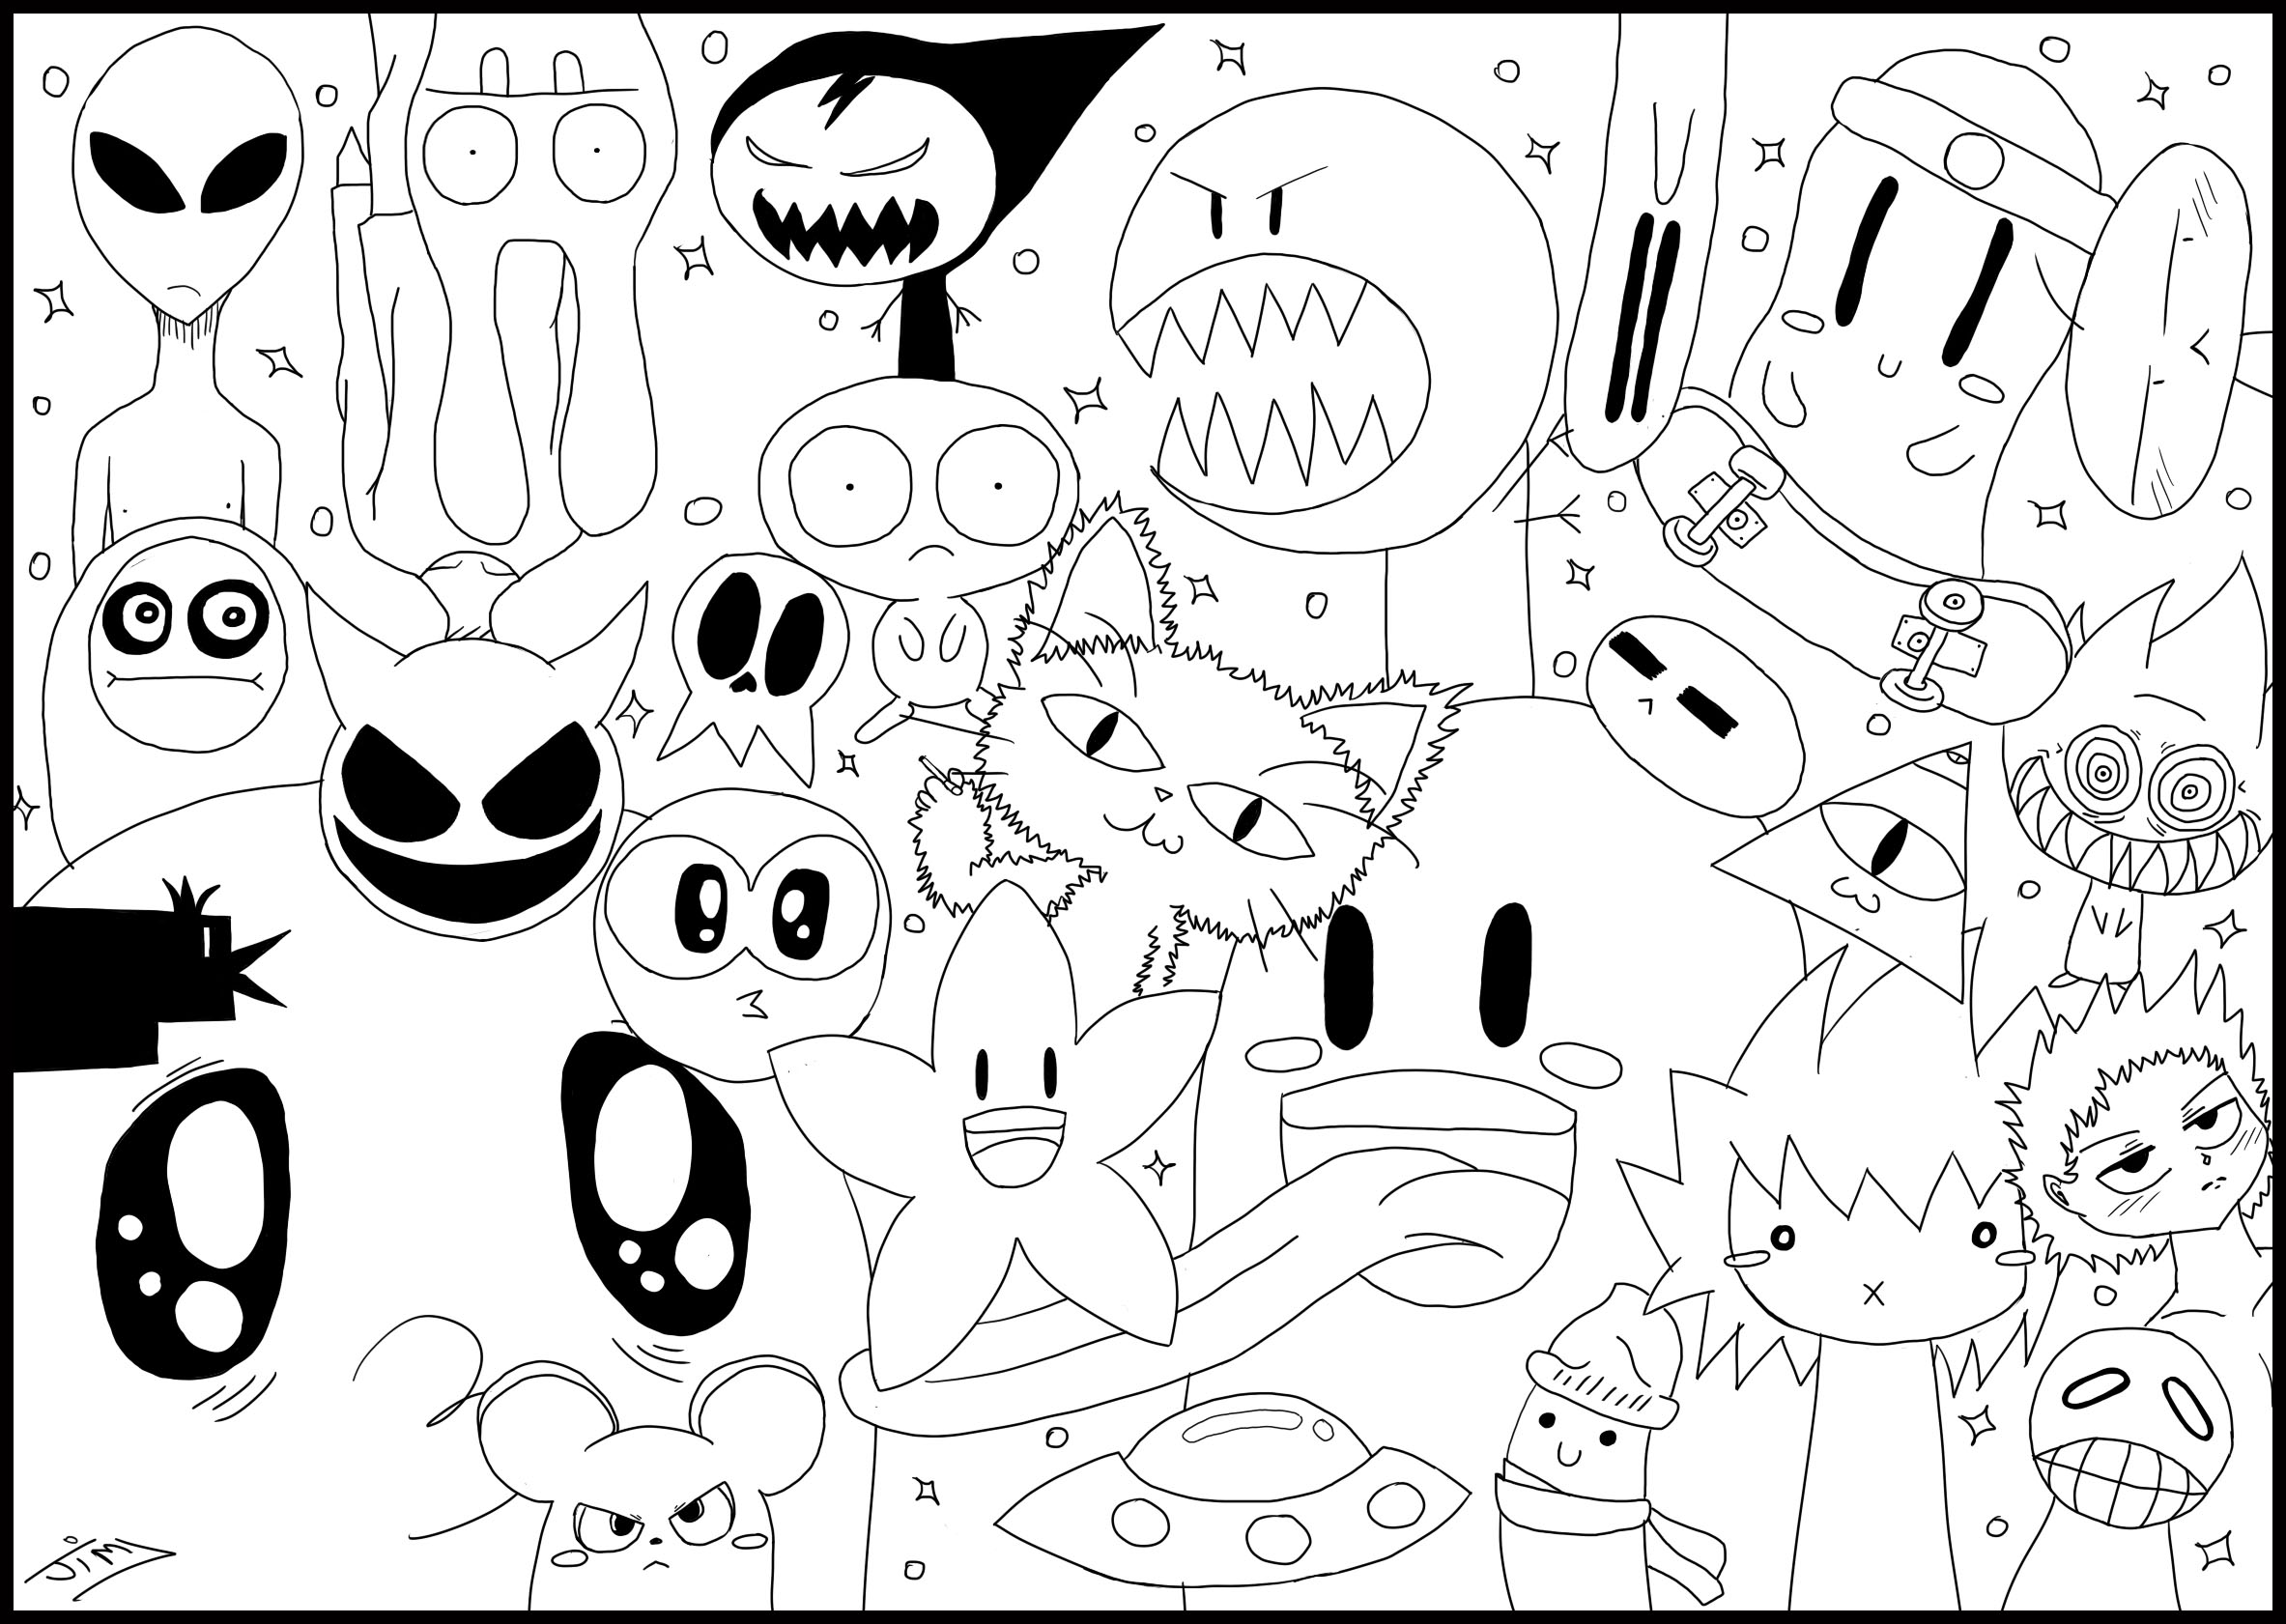 Doodle monster world - Doodle Art / Doodling Adult Coloring Pages